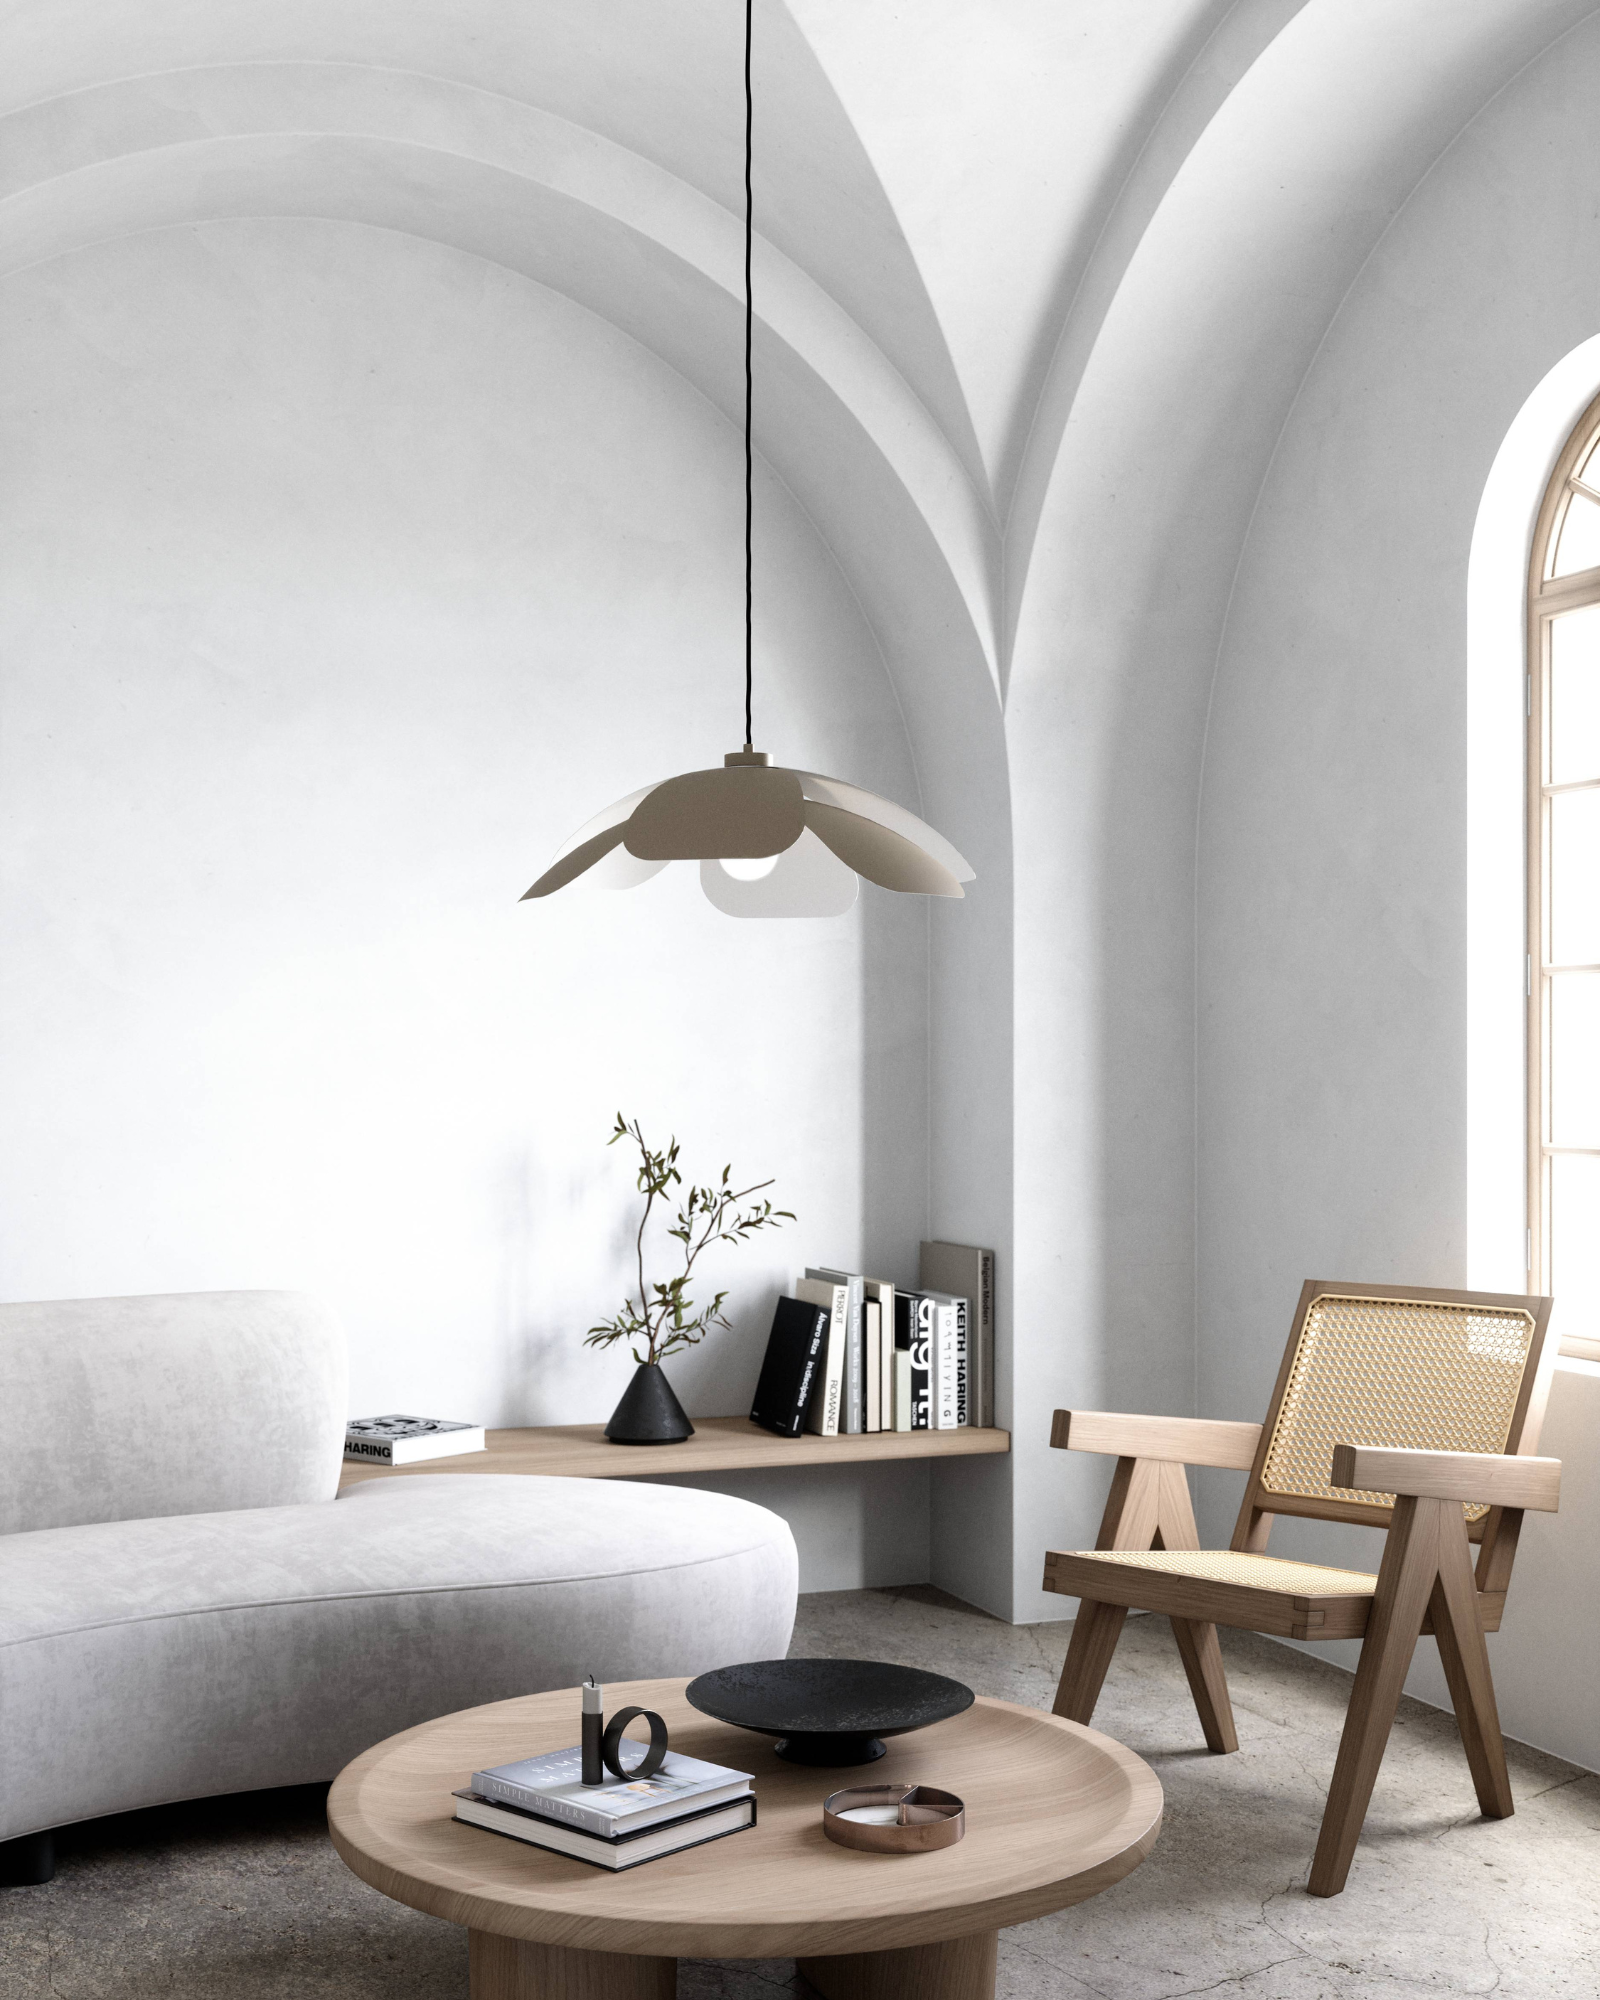 Maple Pendant Light within a Scandinavian living room